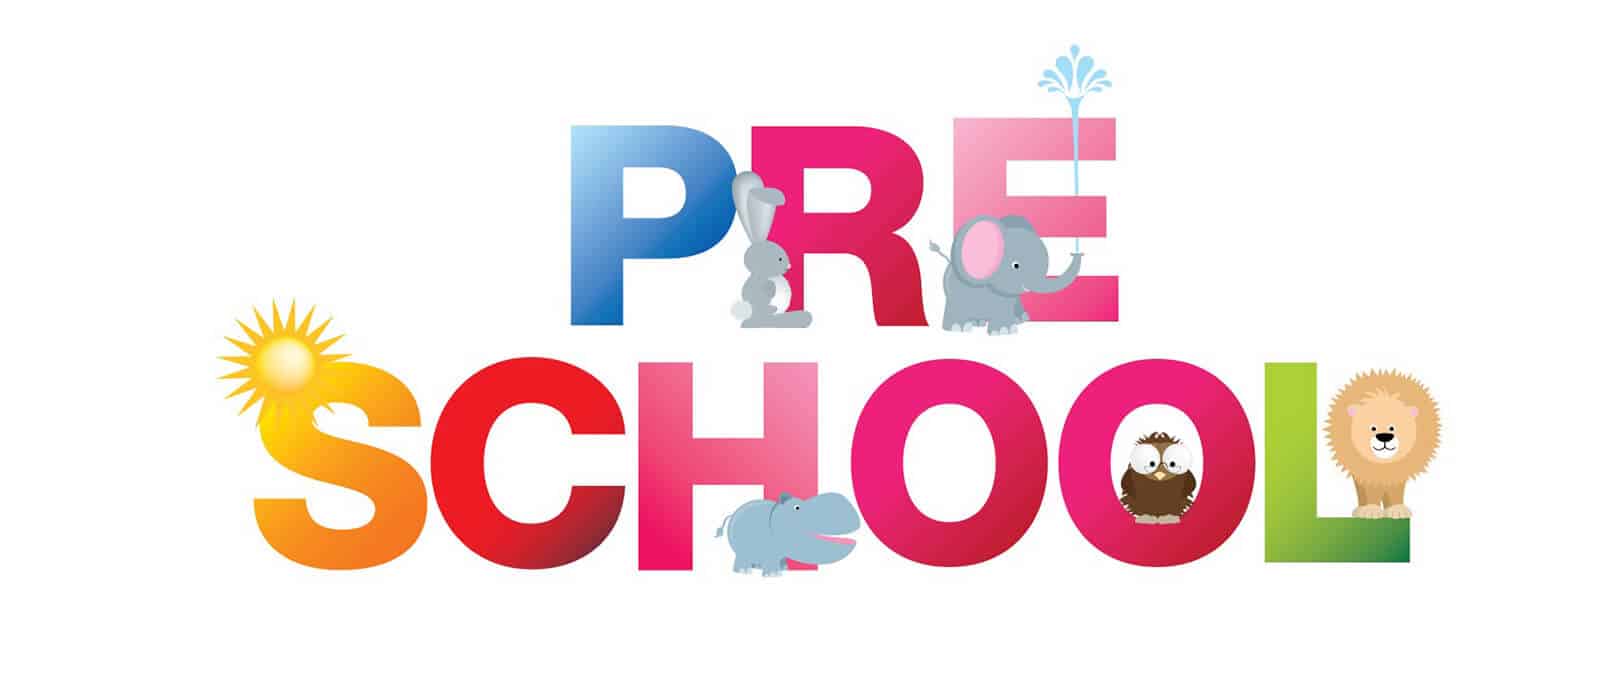 specialkindofplay-Preschool-Program